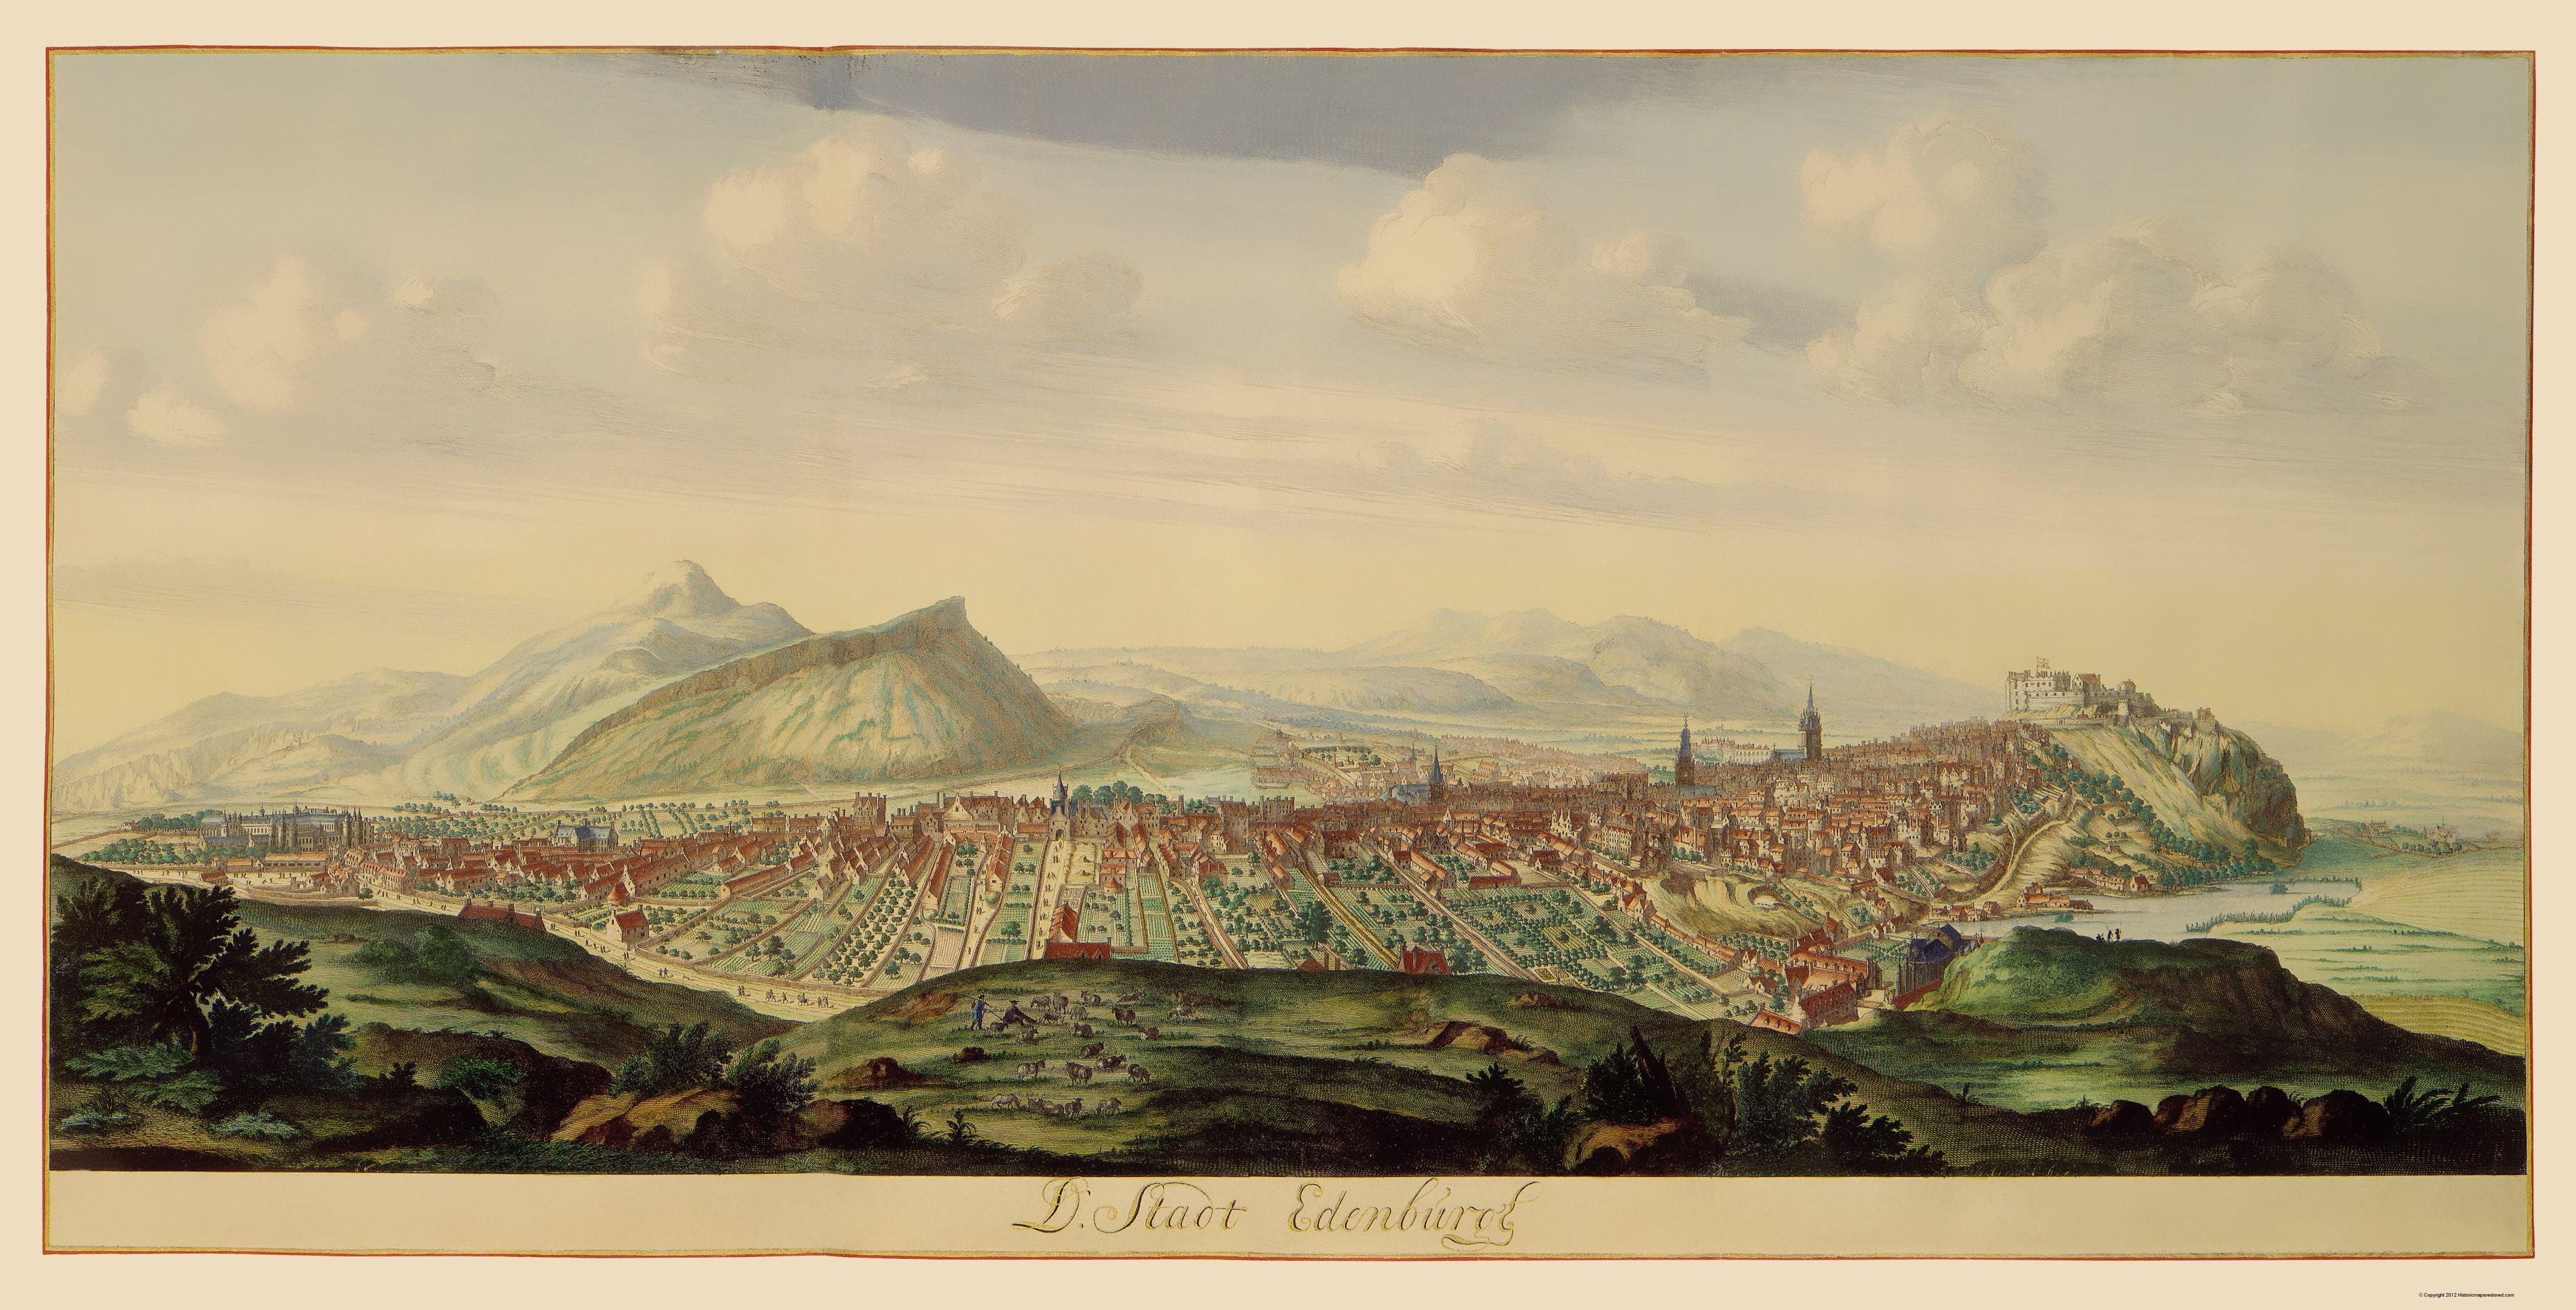 Edinburgh Scotland 1690-23.00 x 45.24 